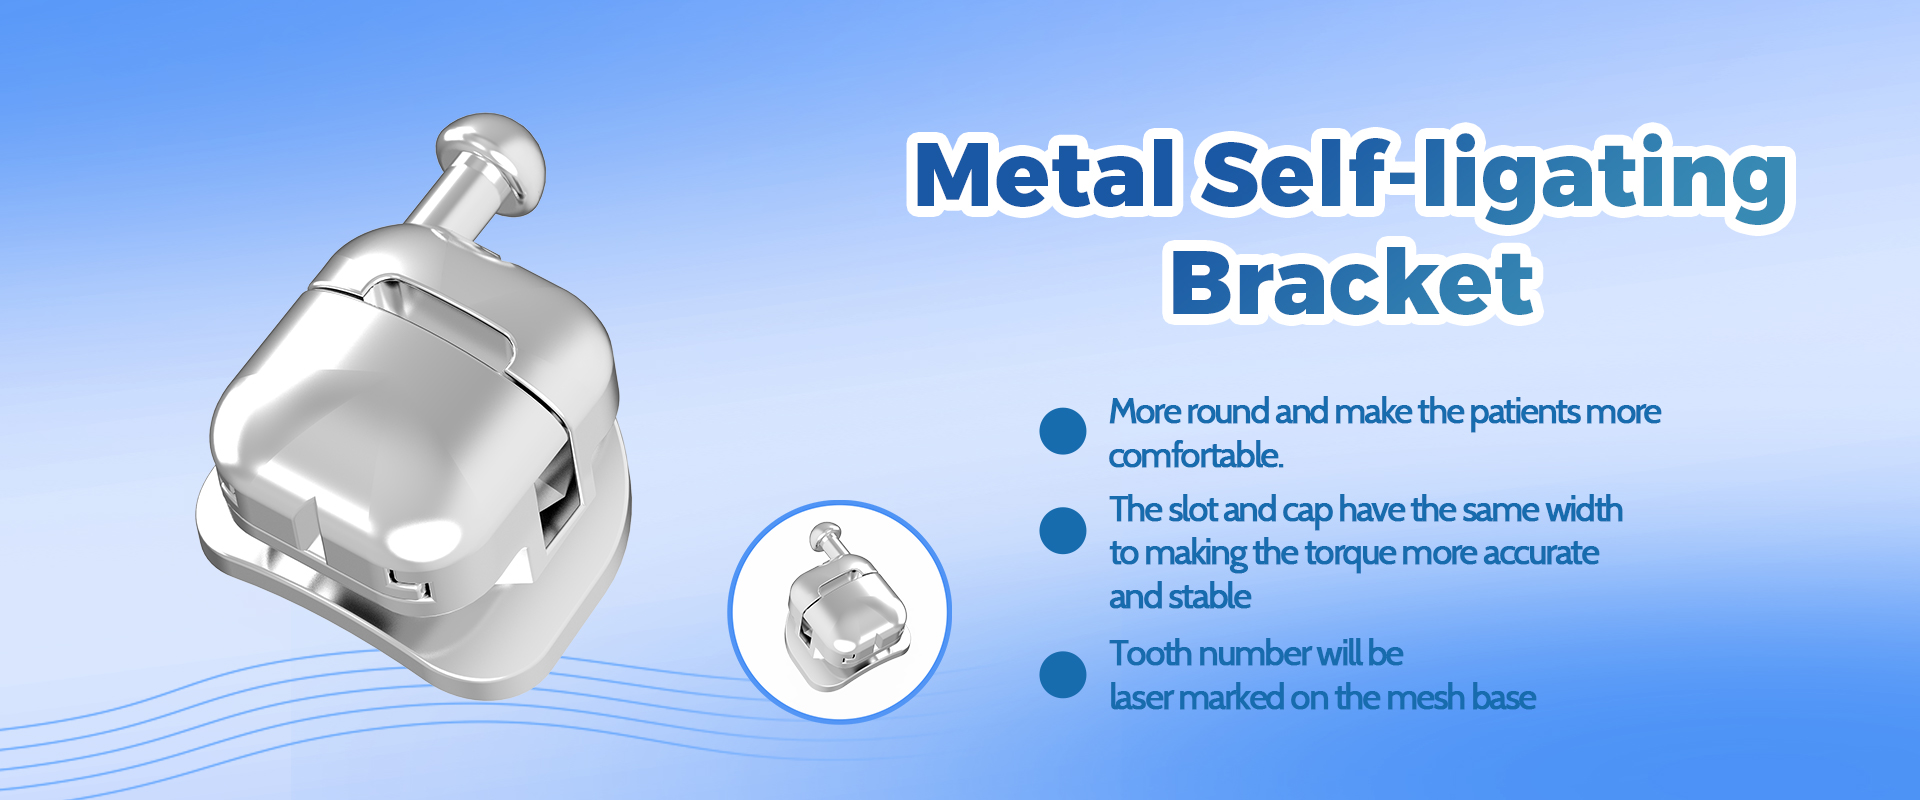 metal self-ligating brackets